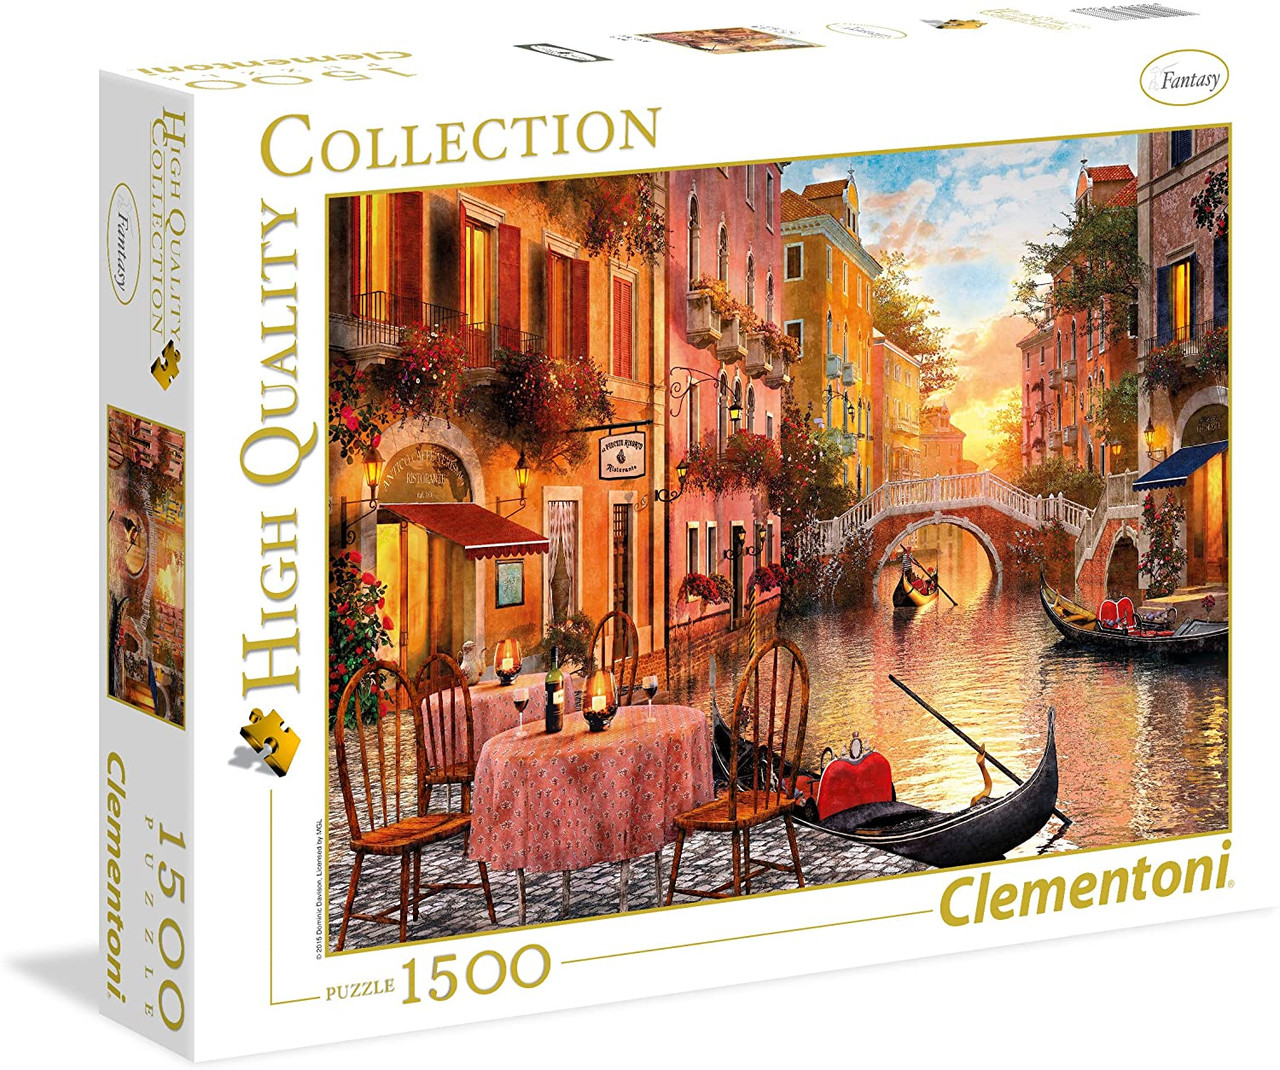 Venice (Venezia) 1500 Piece Jigsaw Puzzle